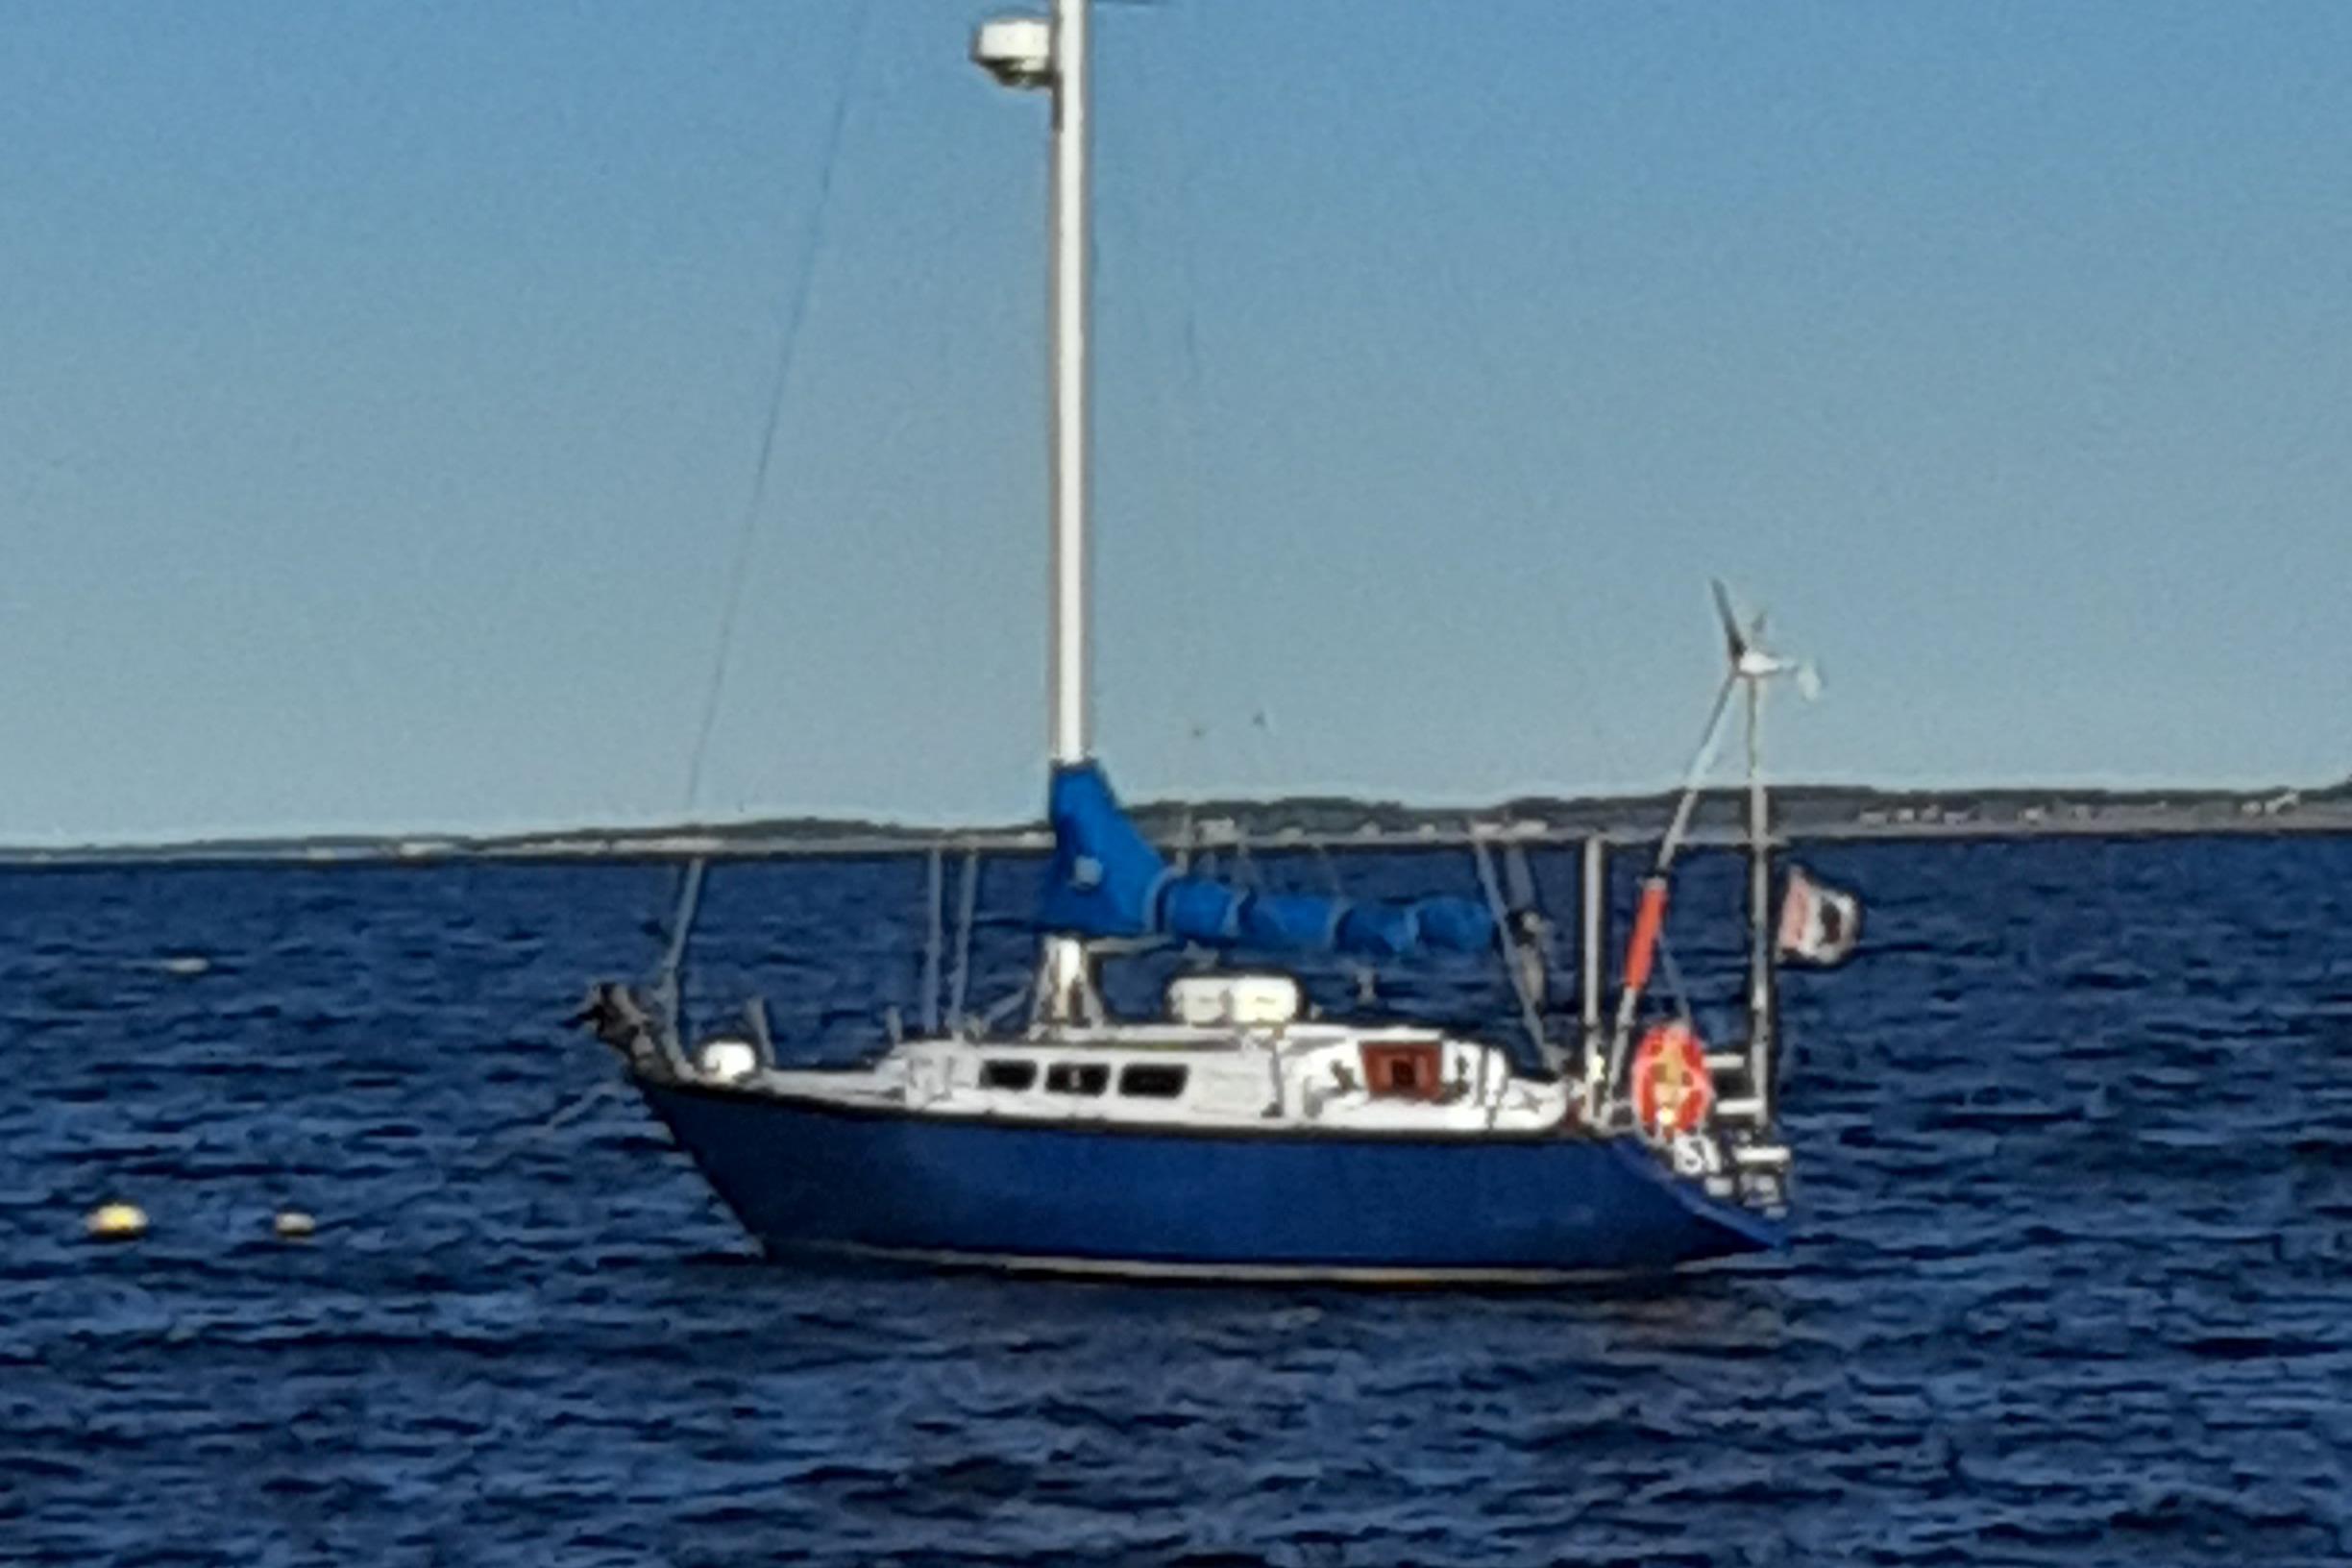 northstar 1500 sailboat for sale